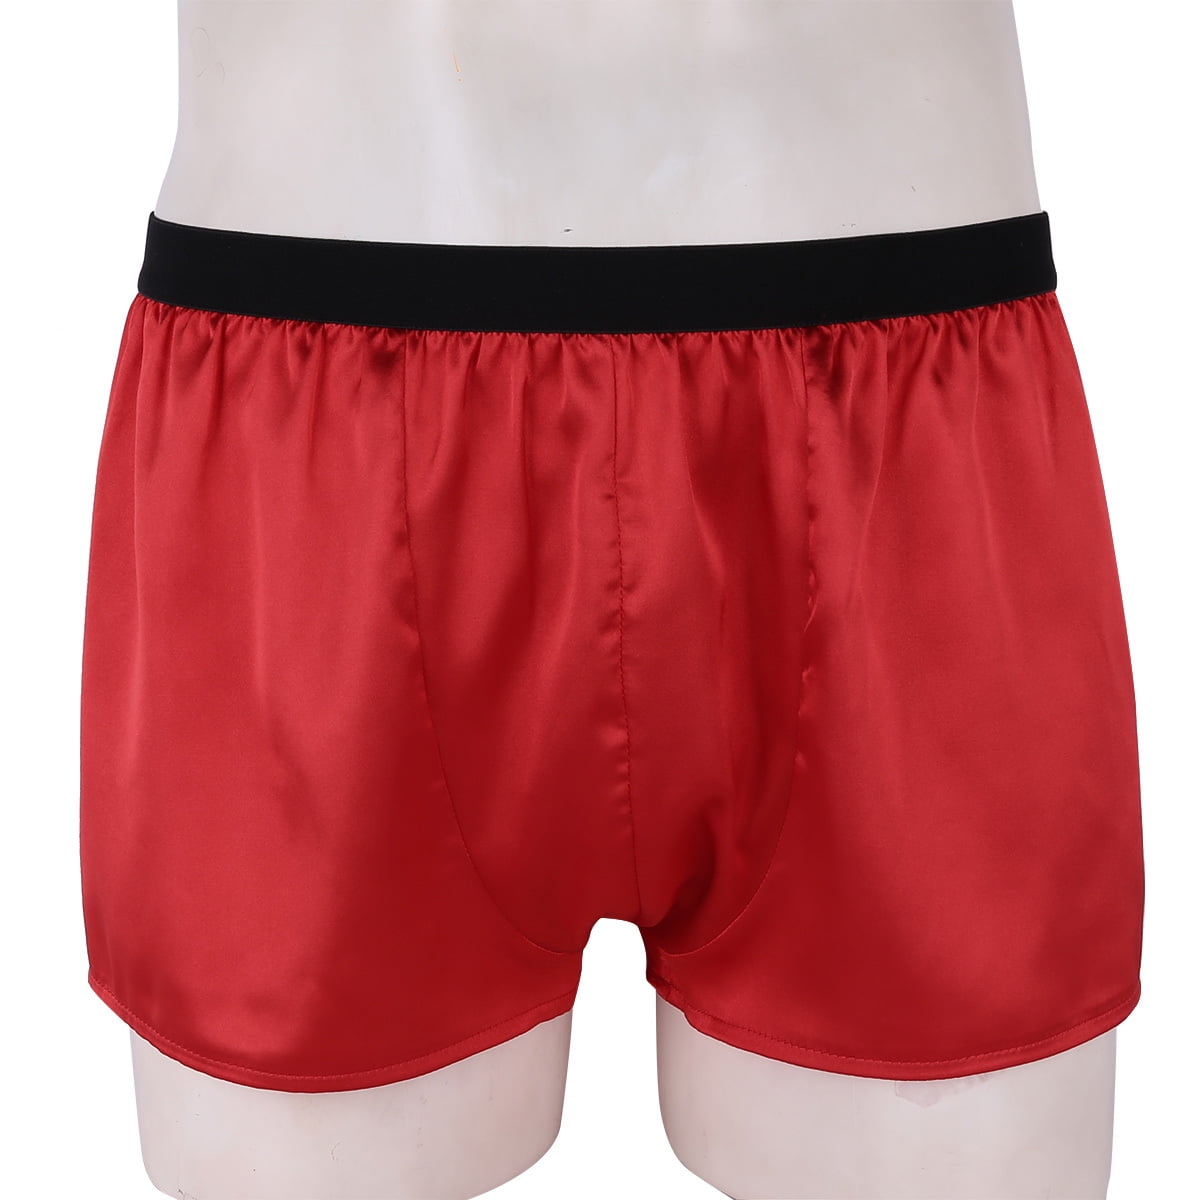 MSemis Men's Silky Satin Boxers Shorts Summer Lounge